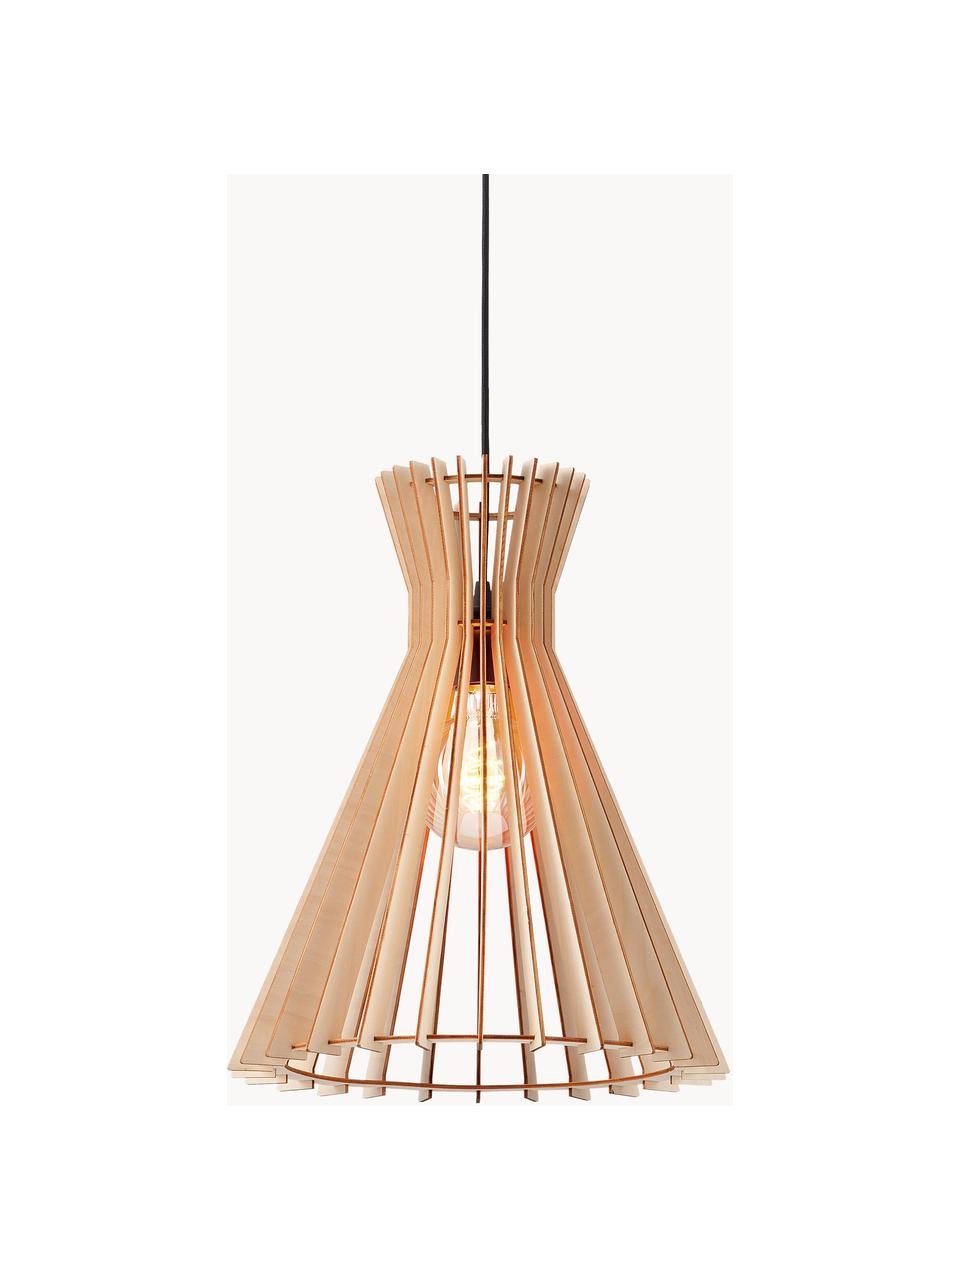 Boho hanglamp Groa van hout, Lampenkap: hout, Beige, lichtbruin, Ø 34 x H 41 cm